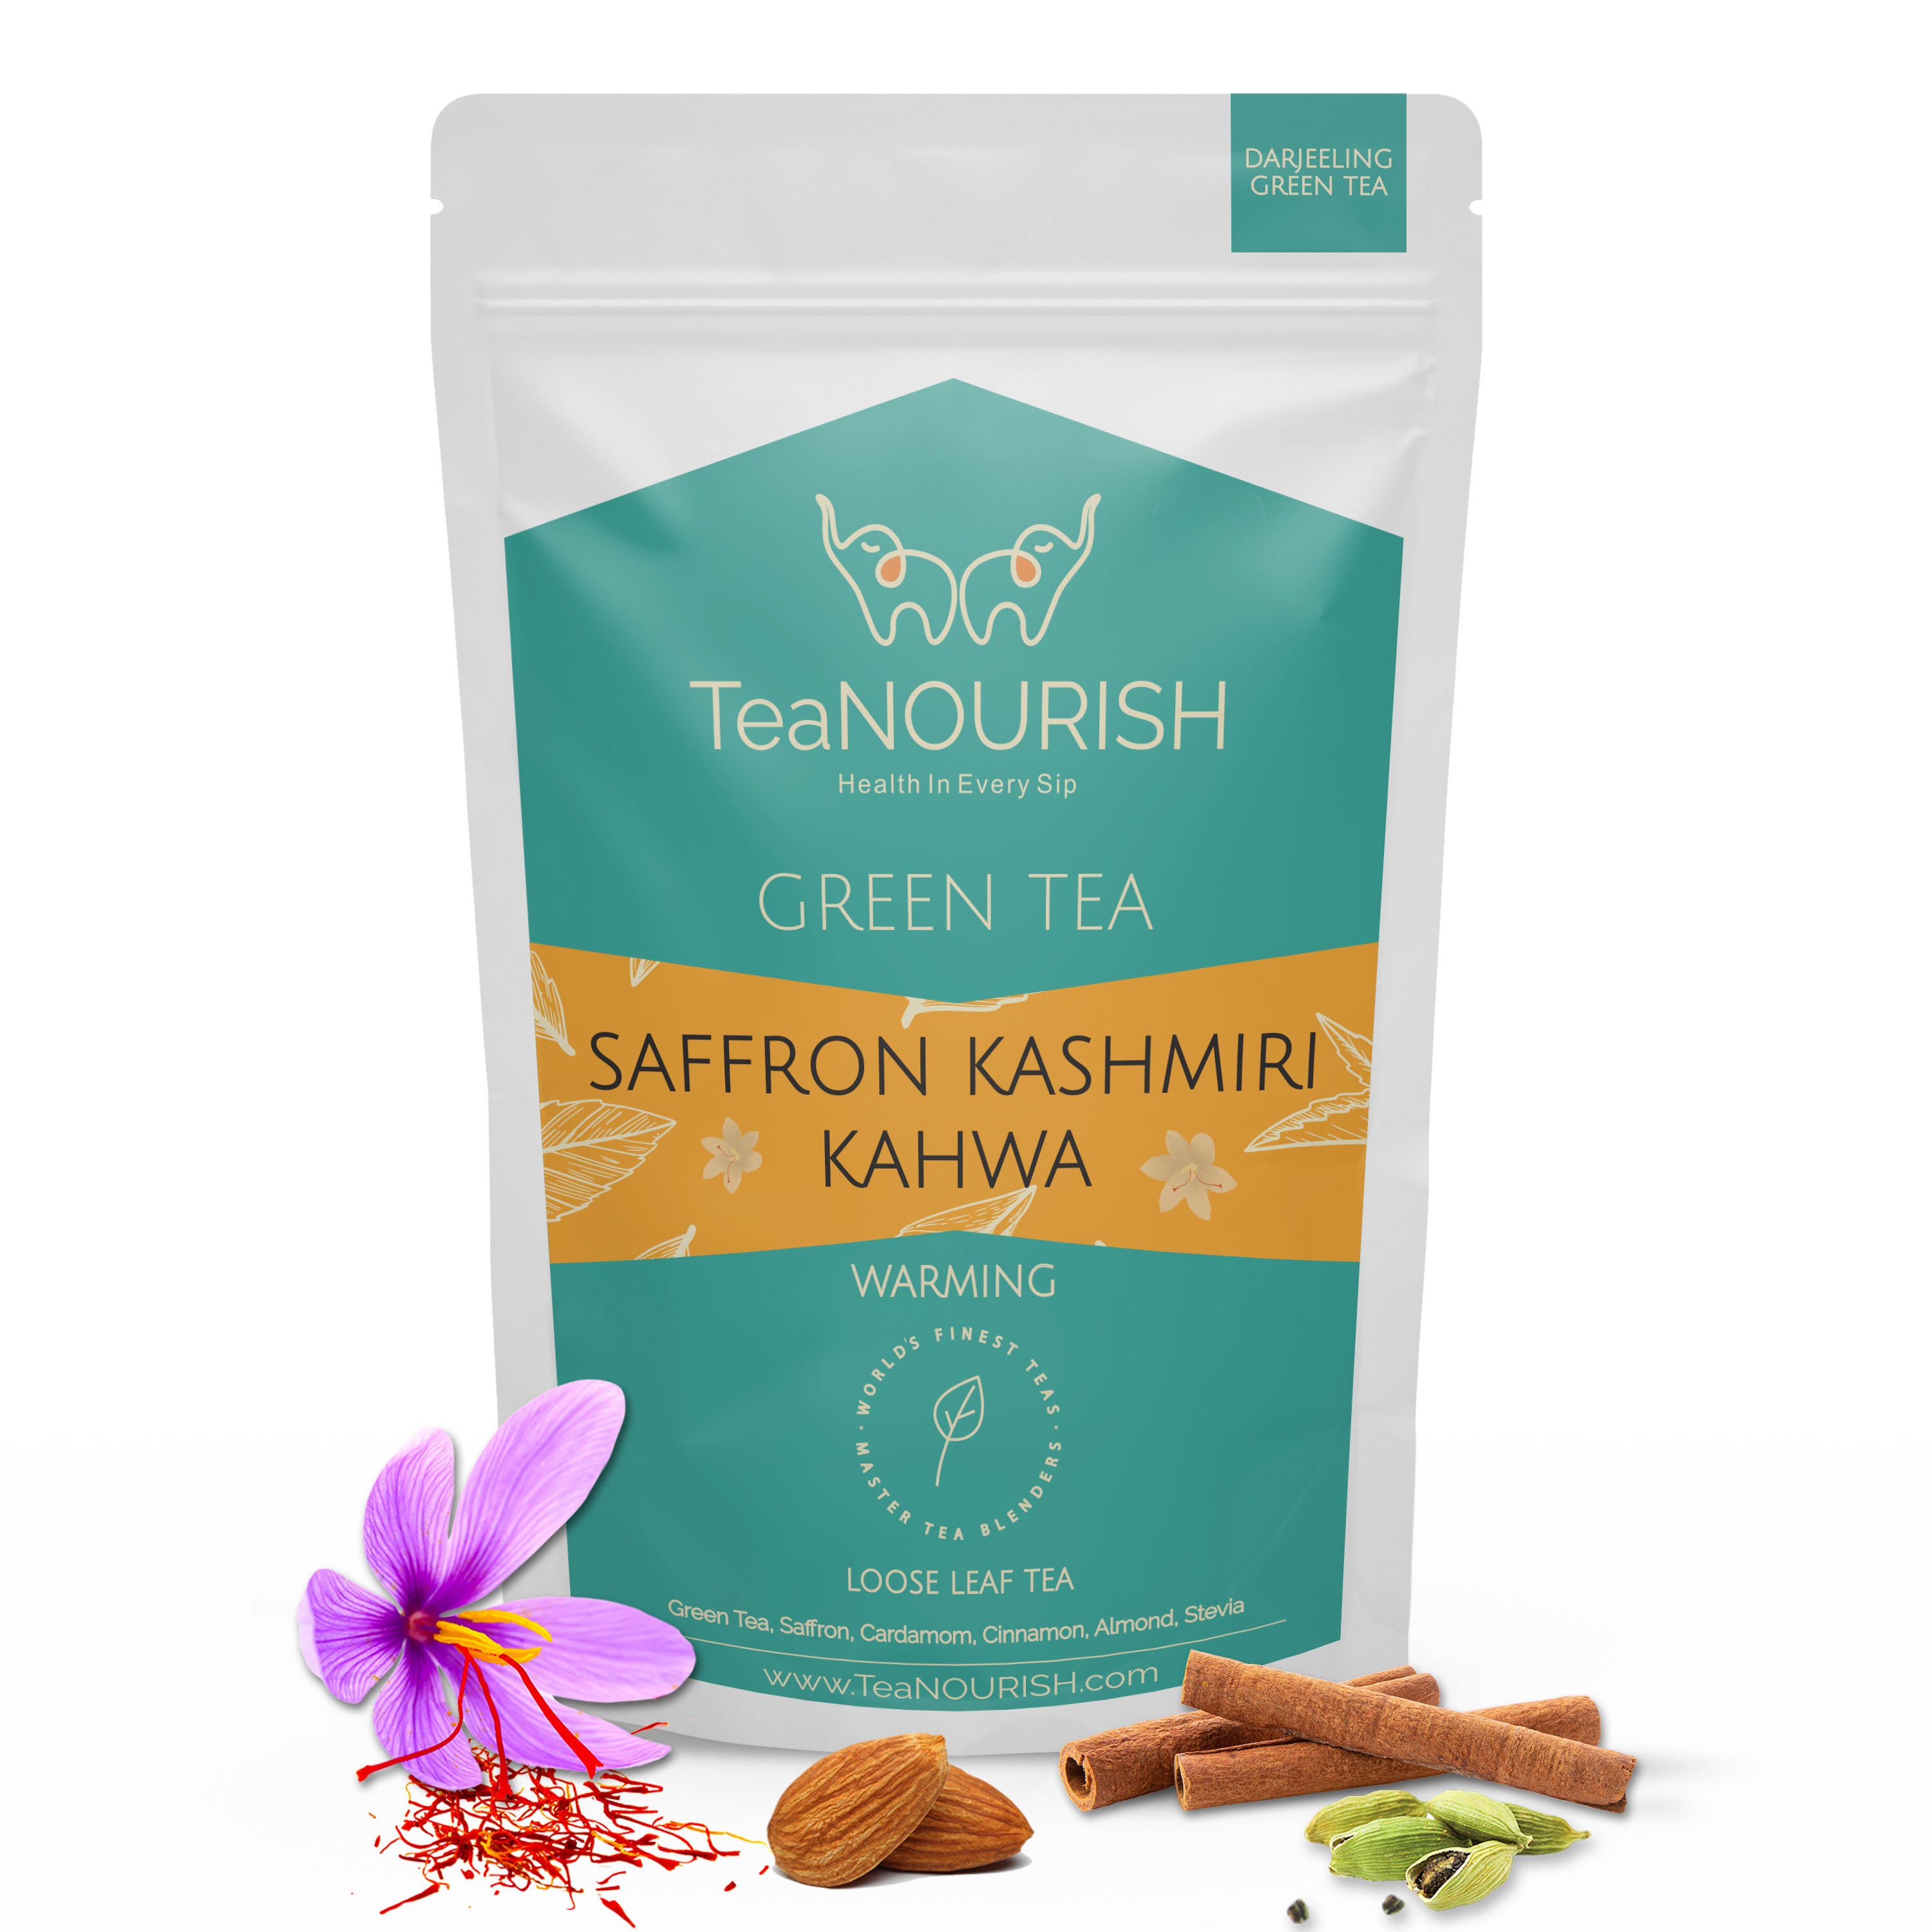 Saffron Kashmiri Kahwa Green Tea Product Picture